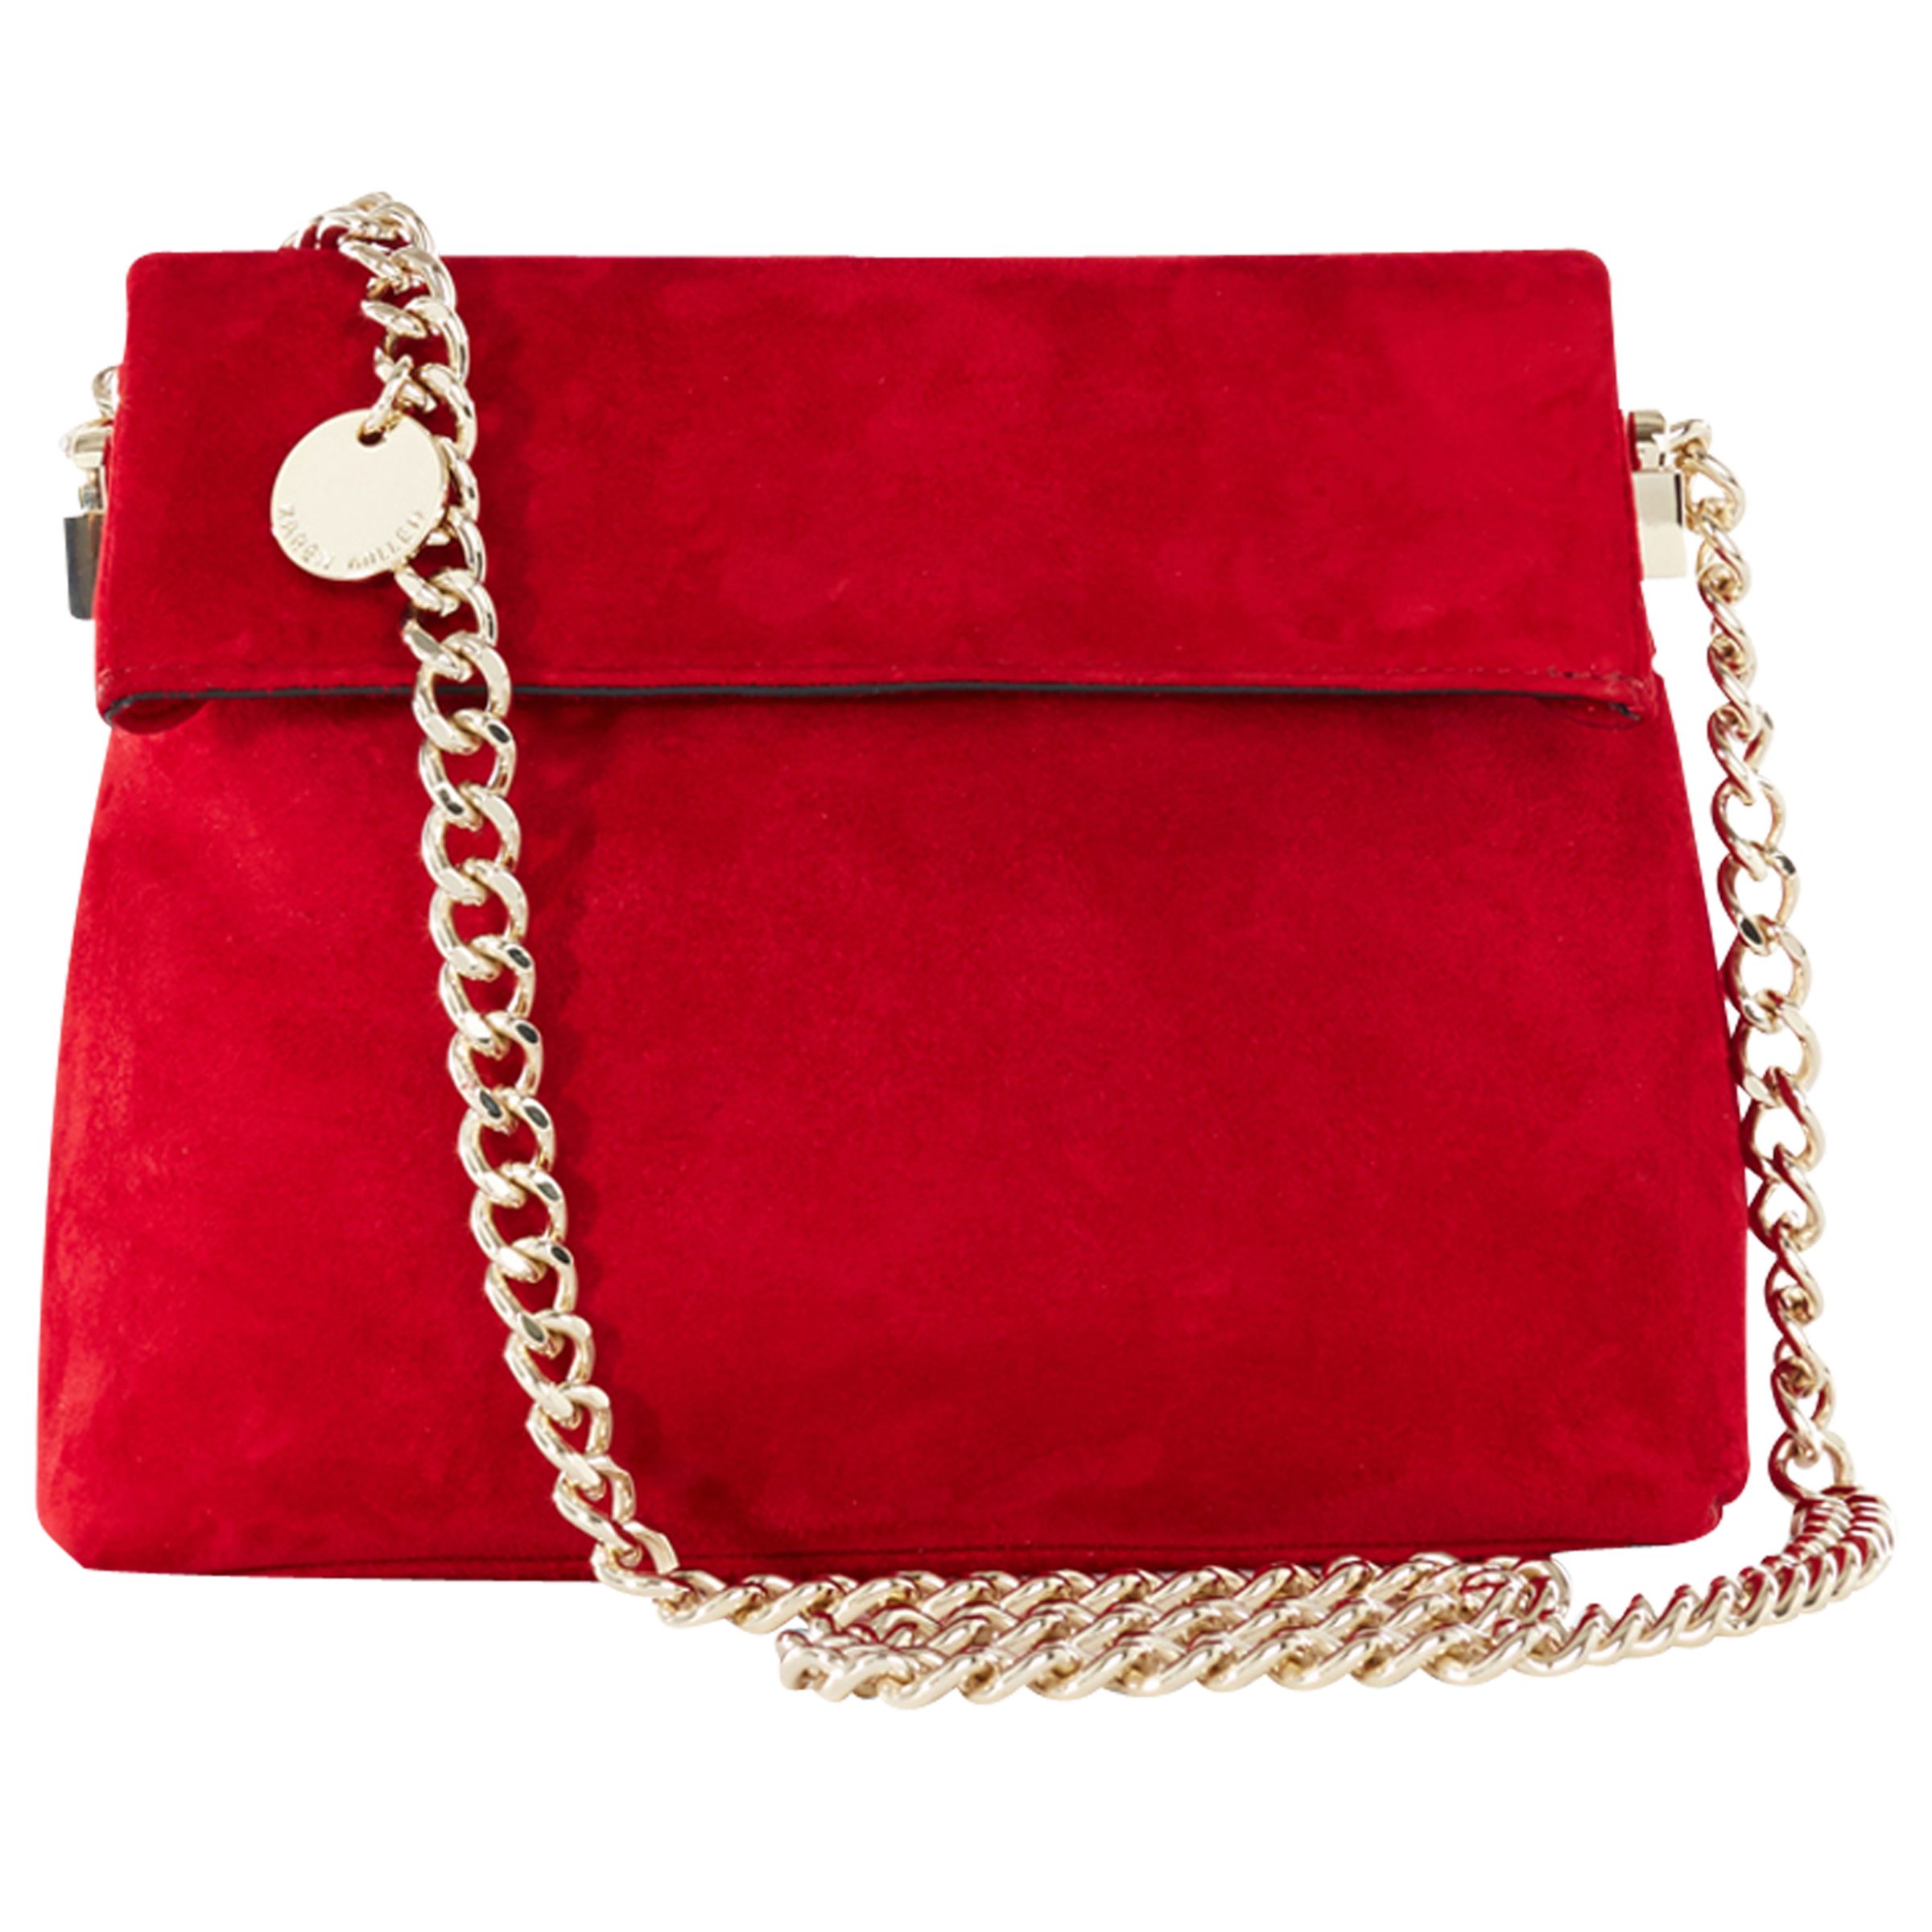 Karen Millen Mini Regent Shoulder Bag, Red at John Lewis & Partners